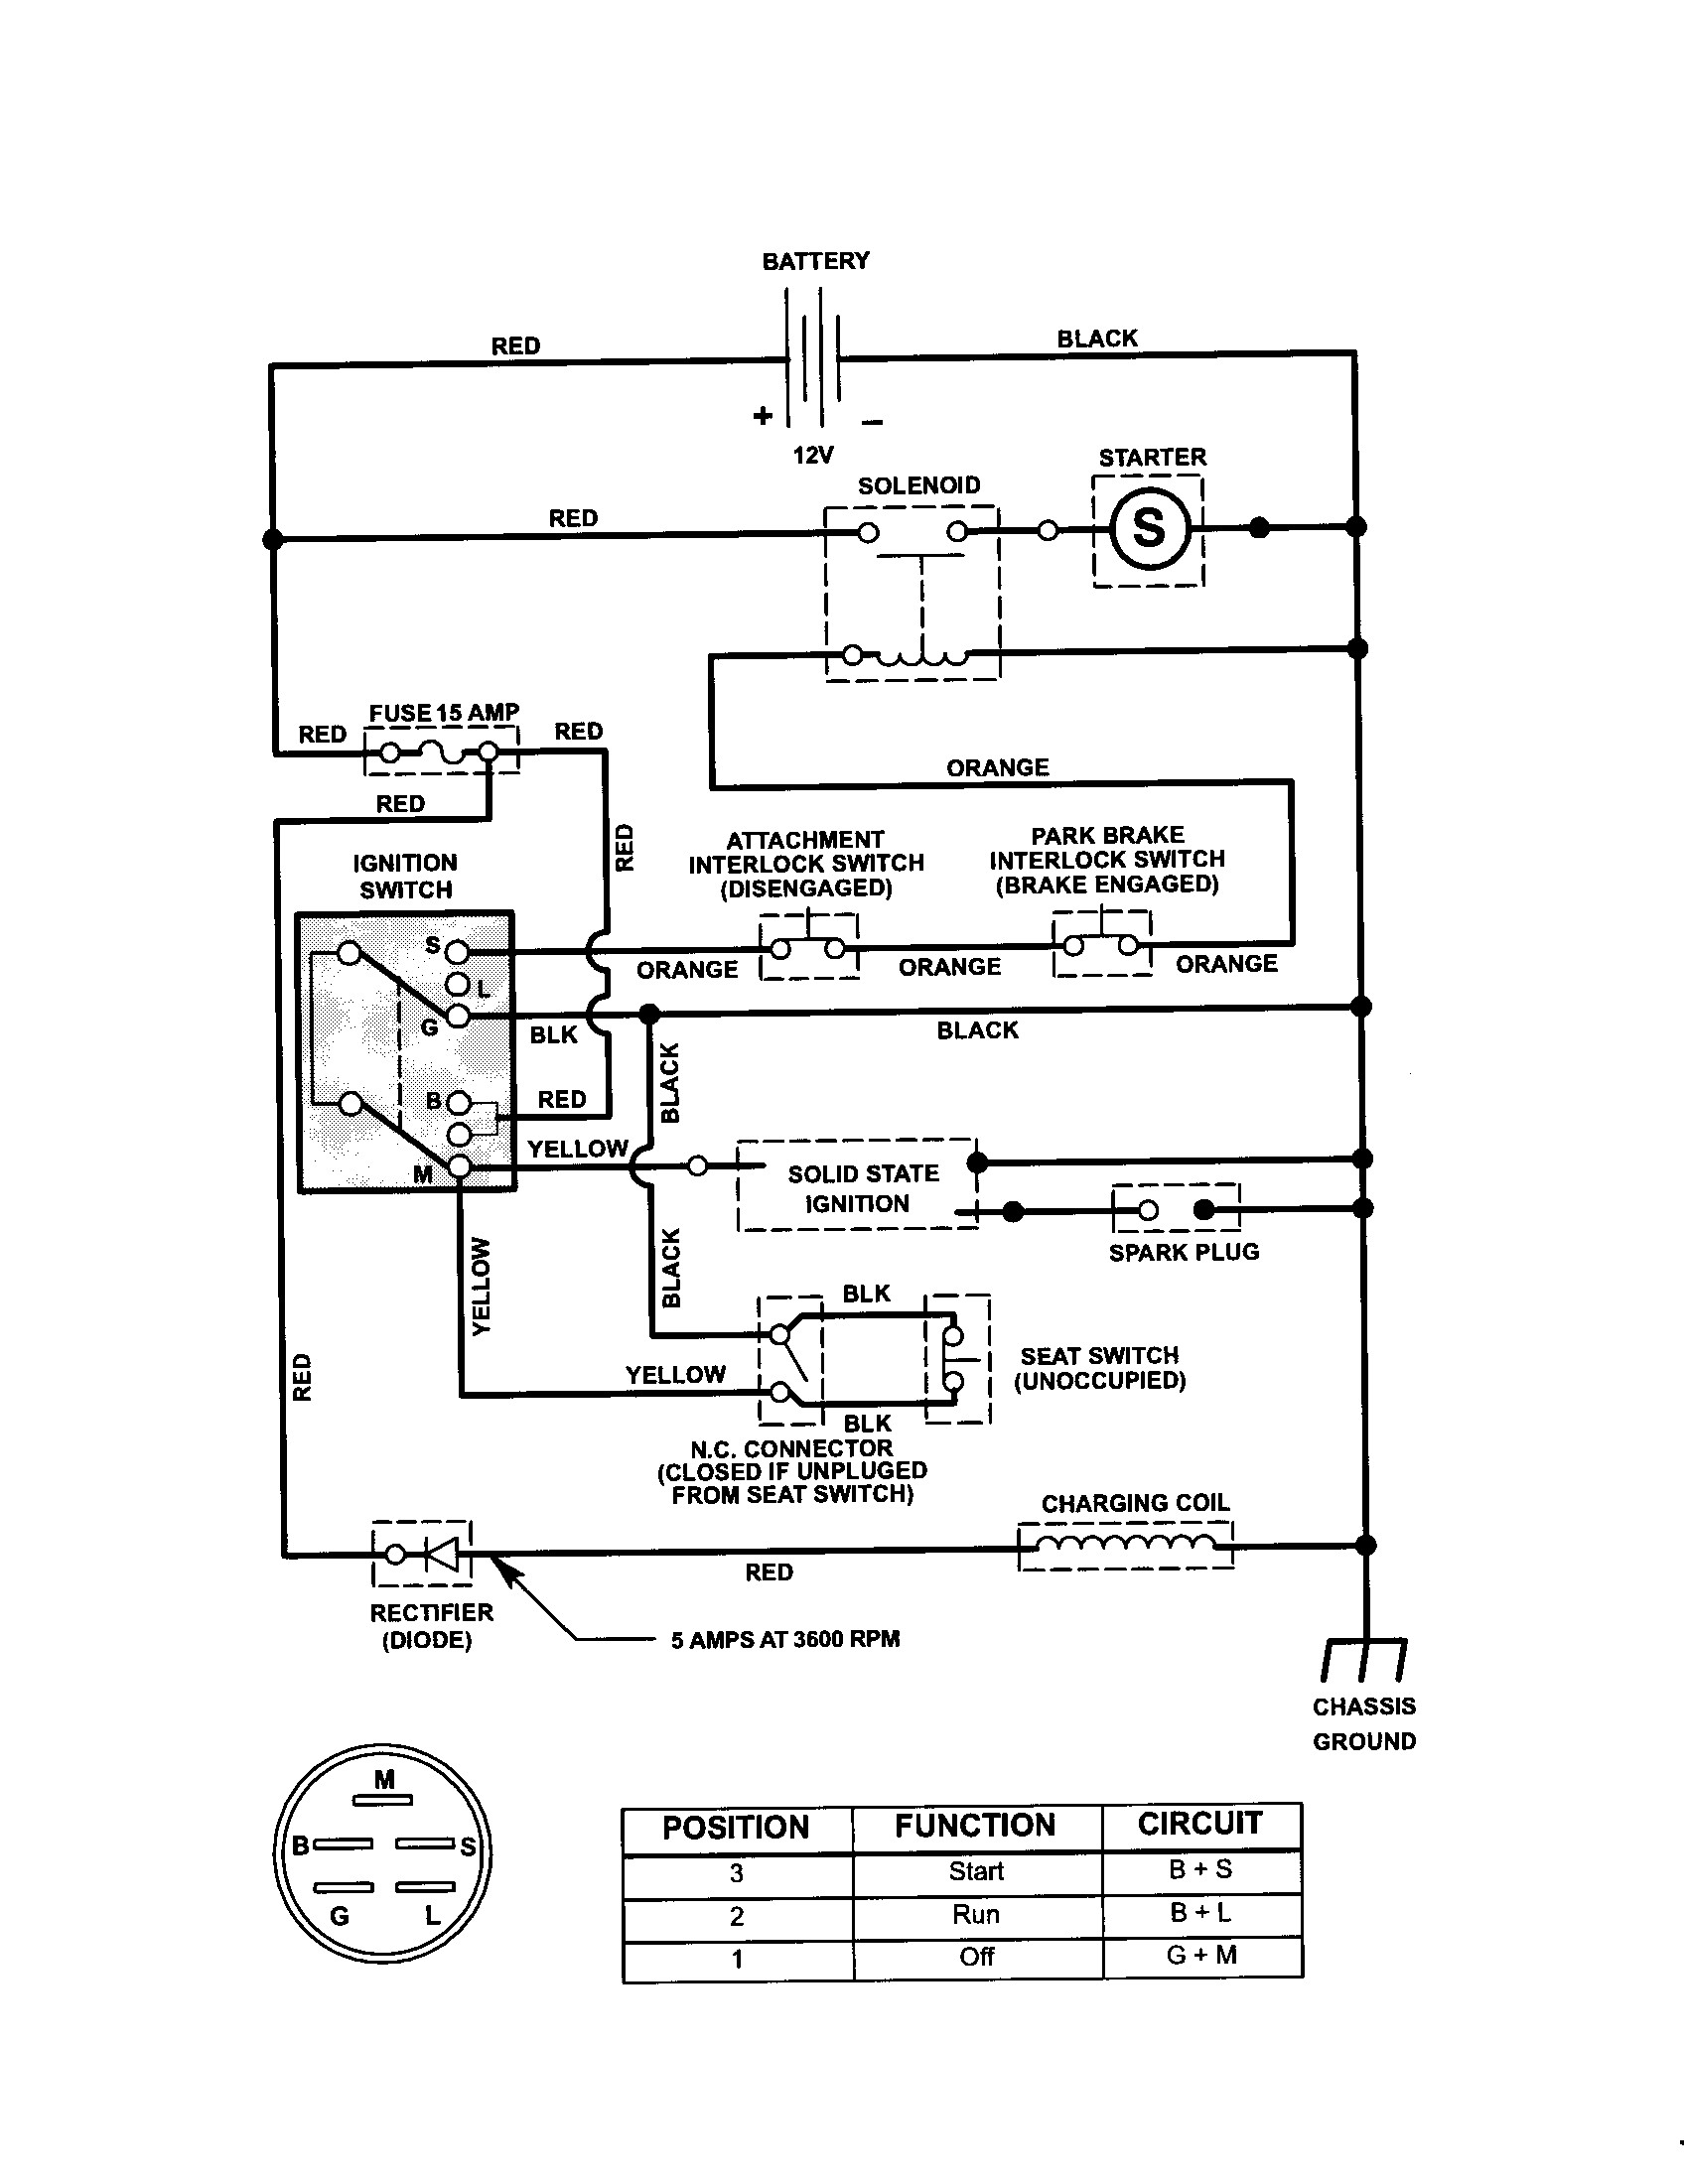 How Does A Engine Work Diagram Craftsman Riding Mower Electrical Diagram Of How Does A Engine Work Diagram